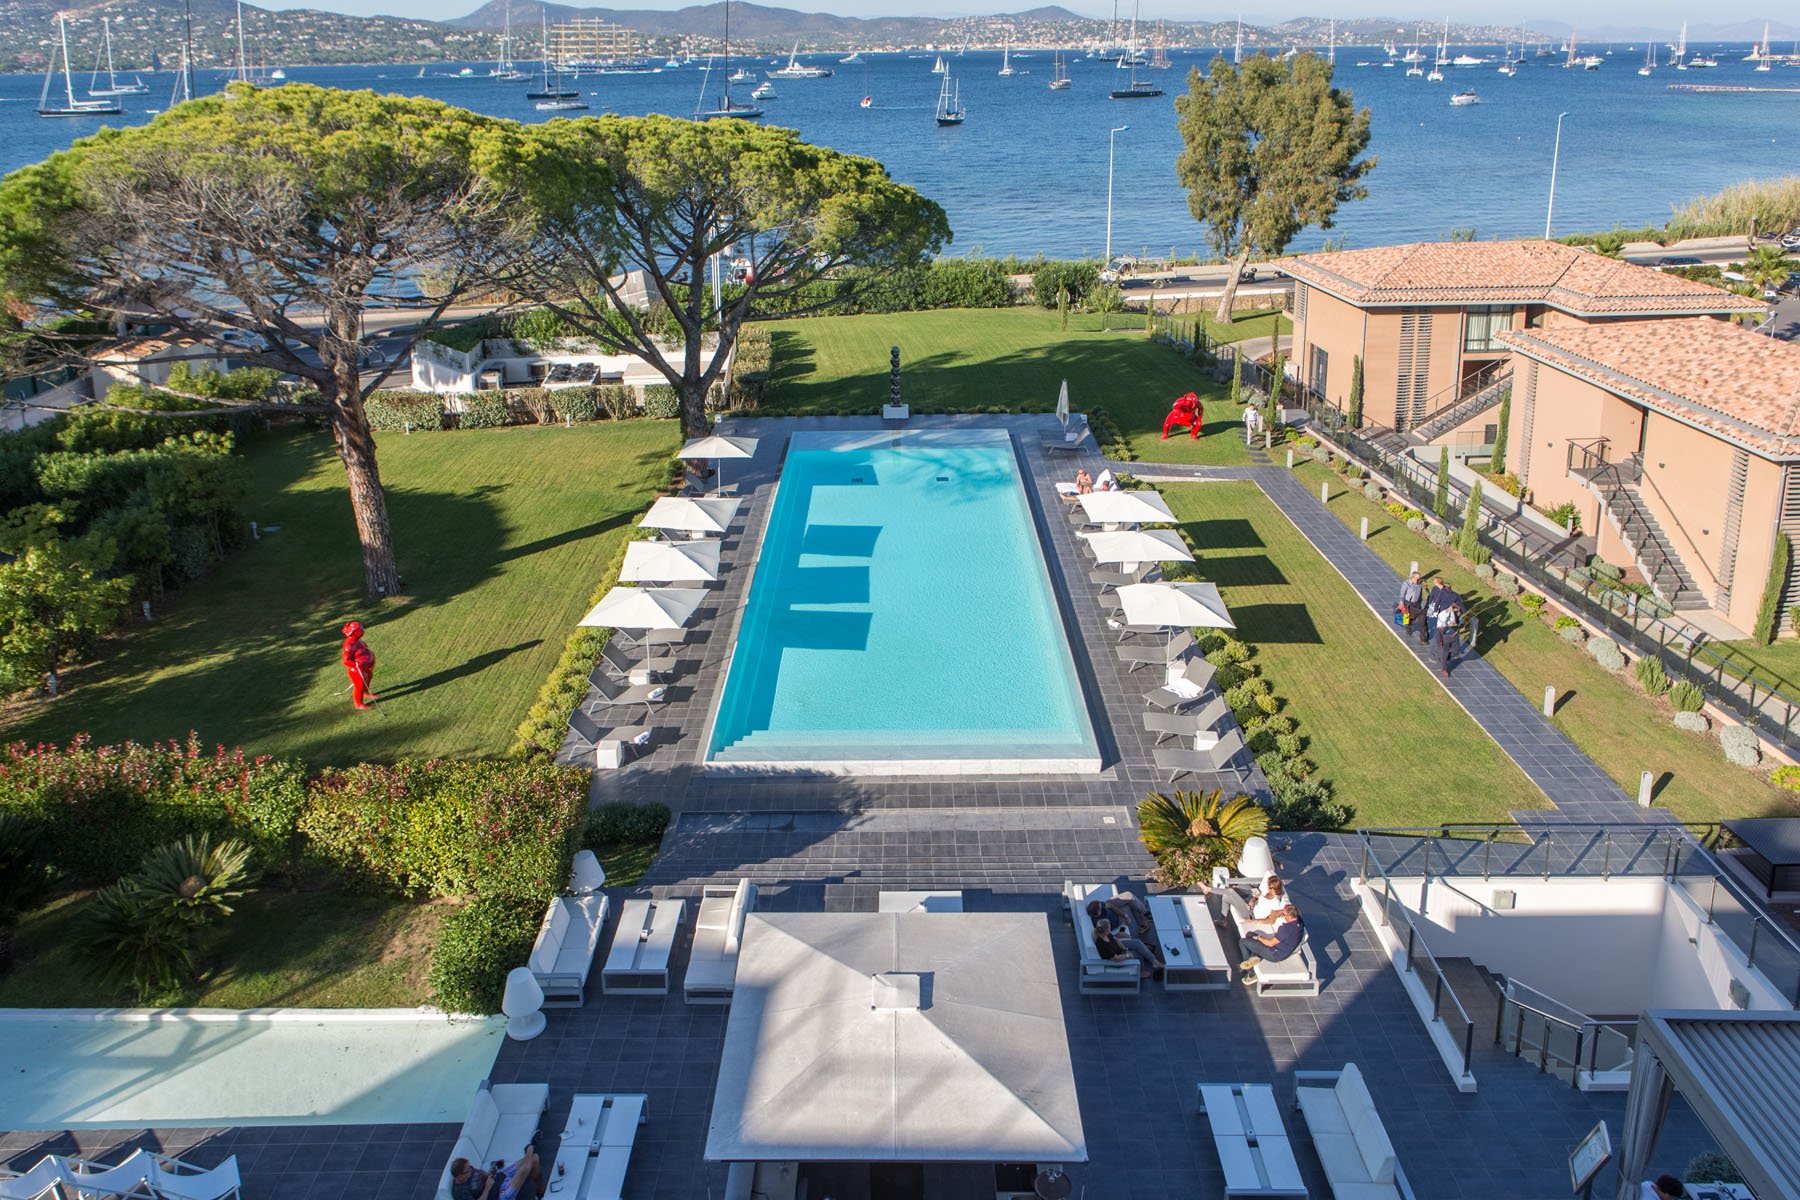 XL Pool - Kube Hotel Saint-Tropez - South of France